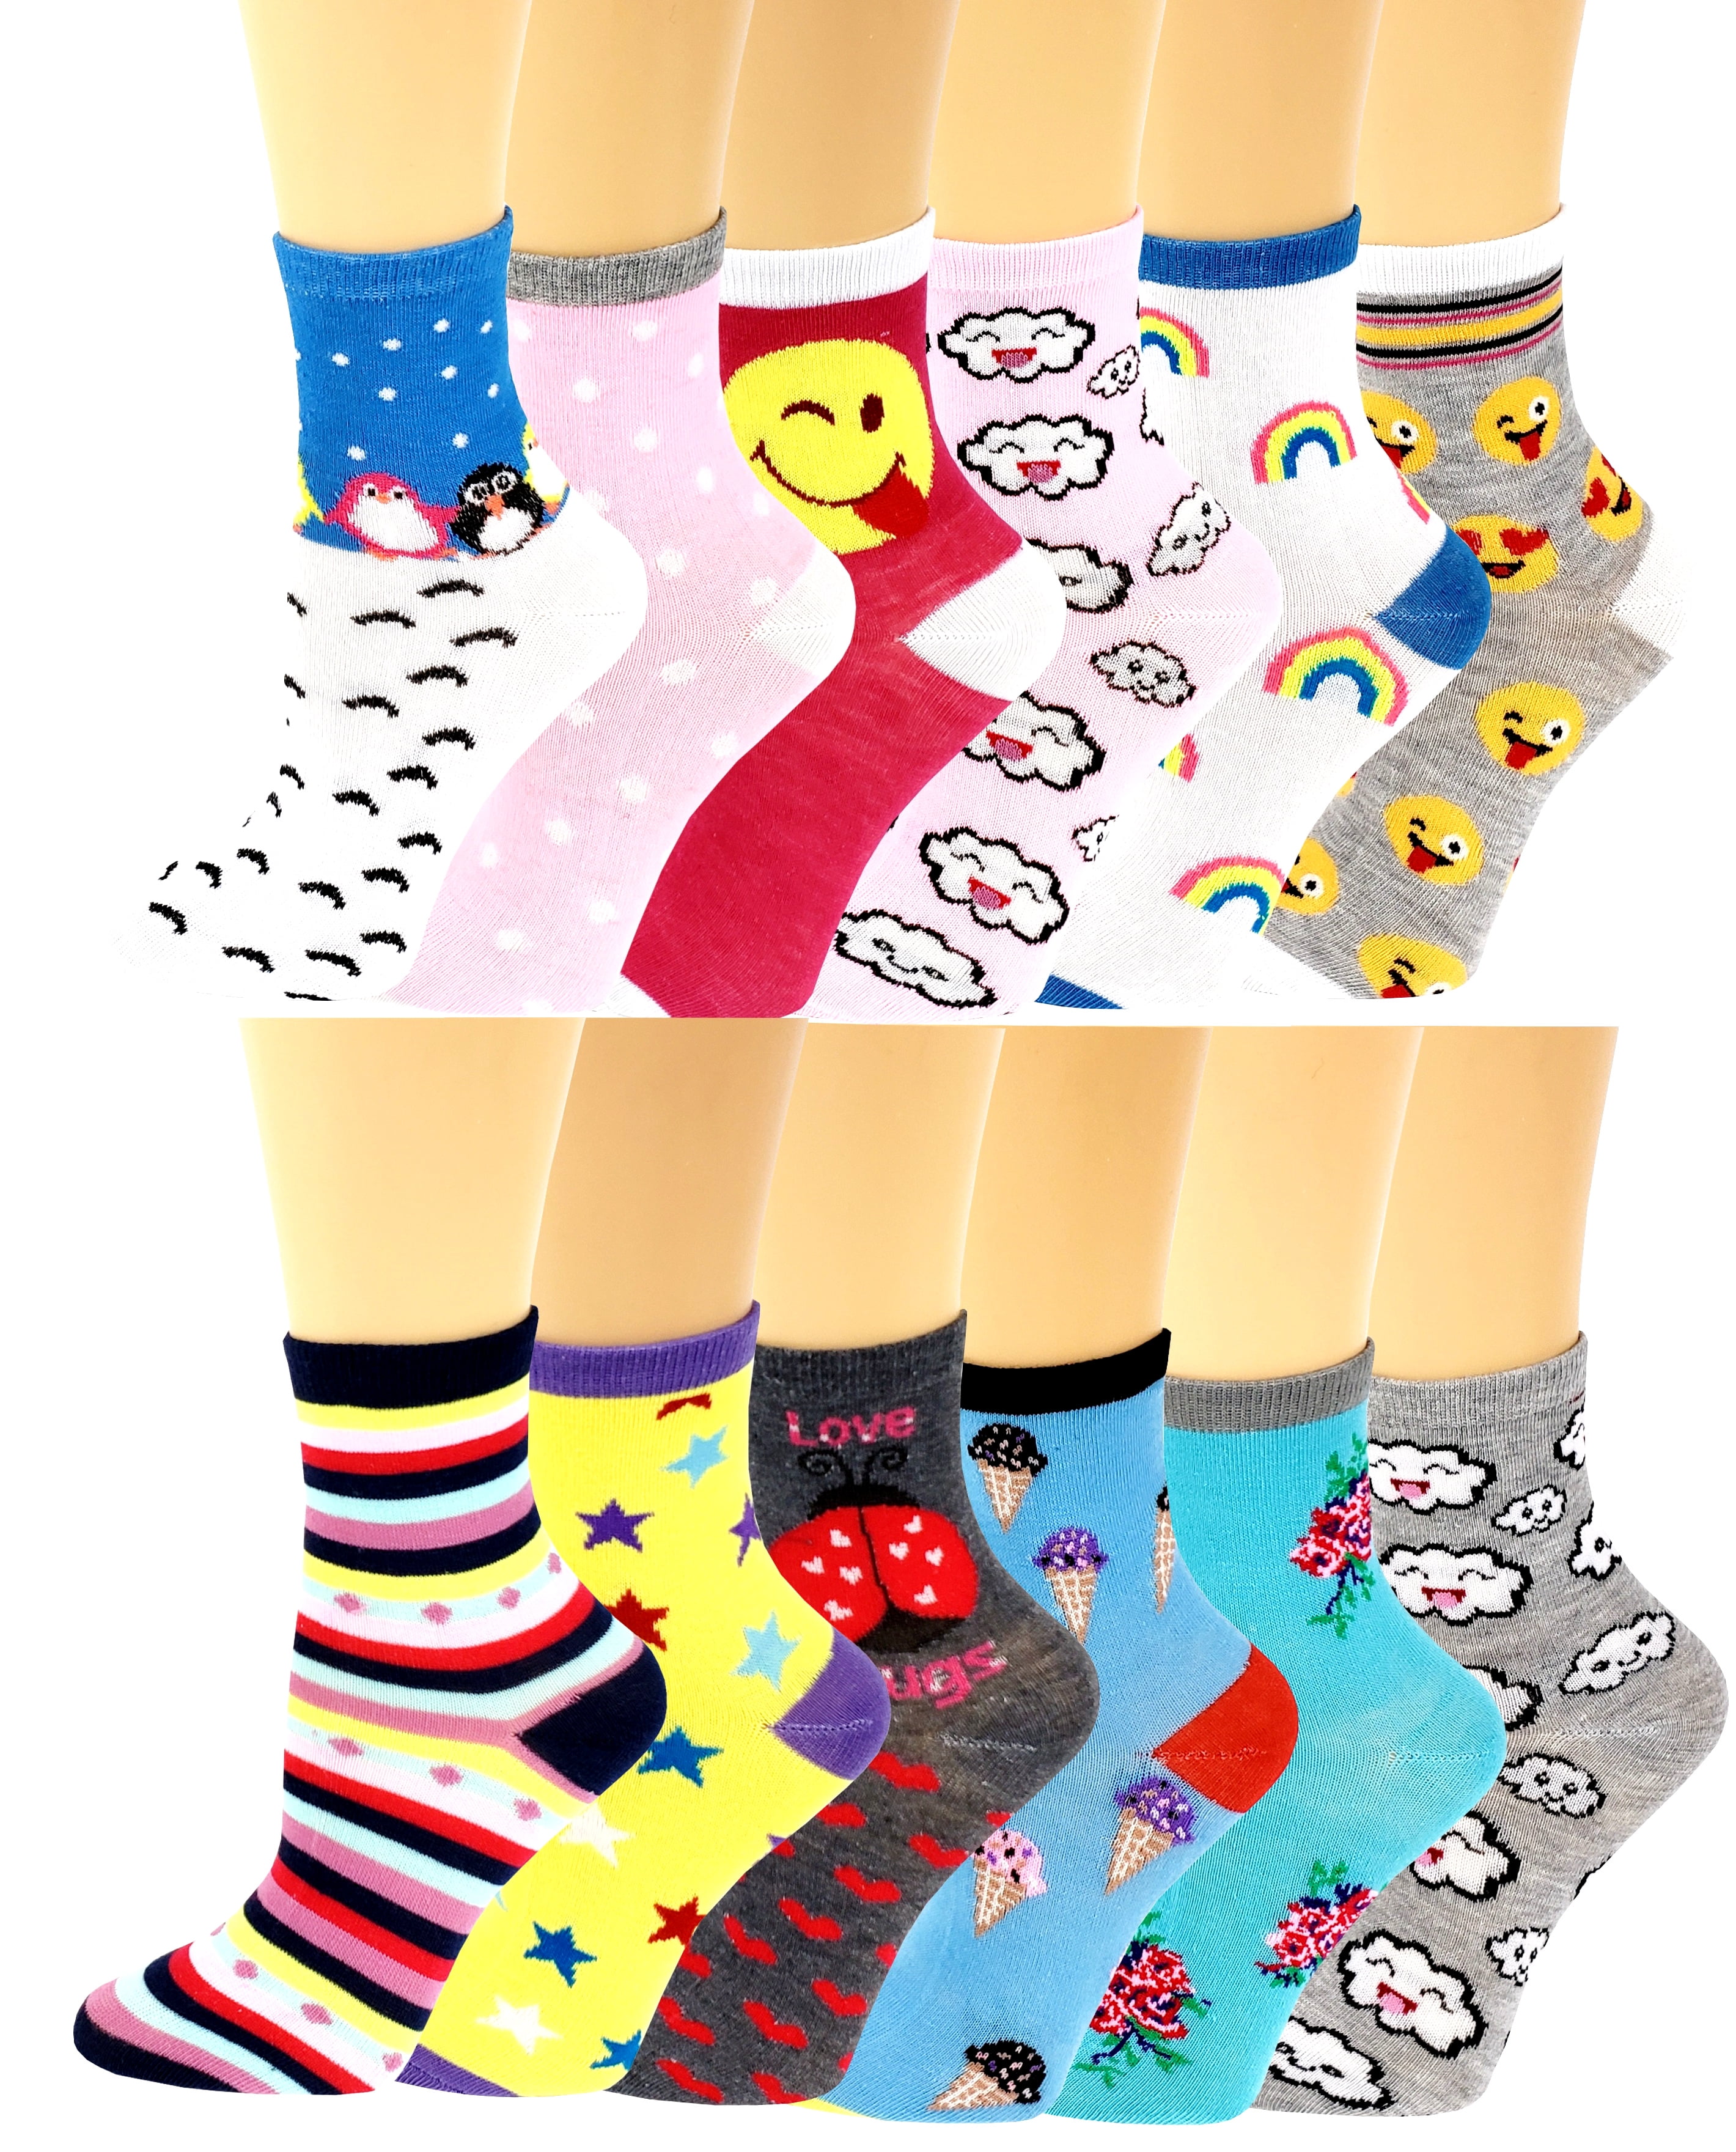 5 Pairs Kids Cotton Ankle Socks Striped Dot Stylish Soft Hosiery Multiple Colors 